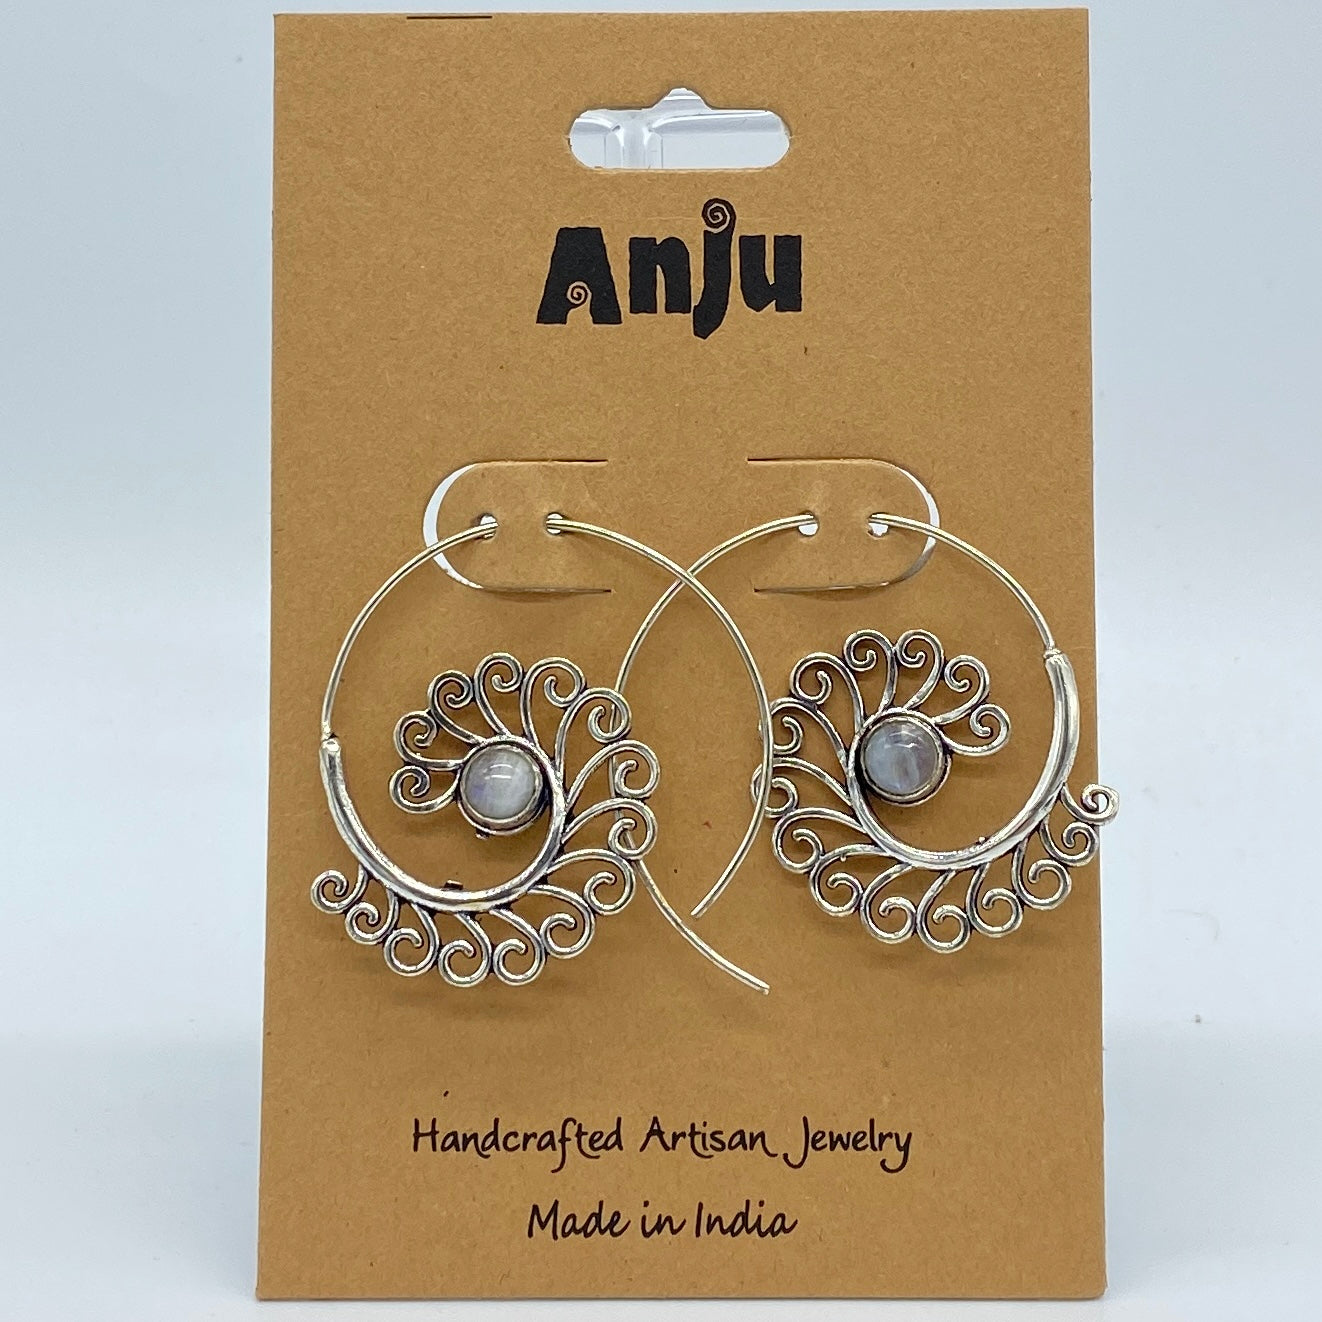 The Tanvi Collection by Anju